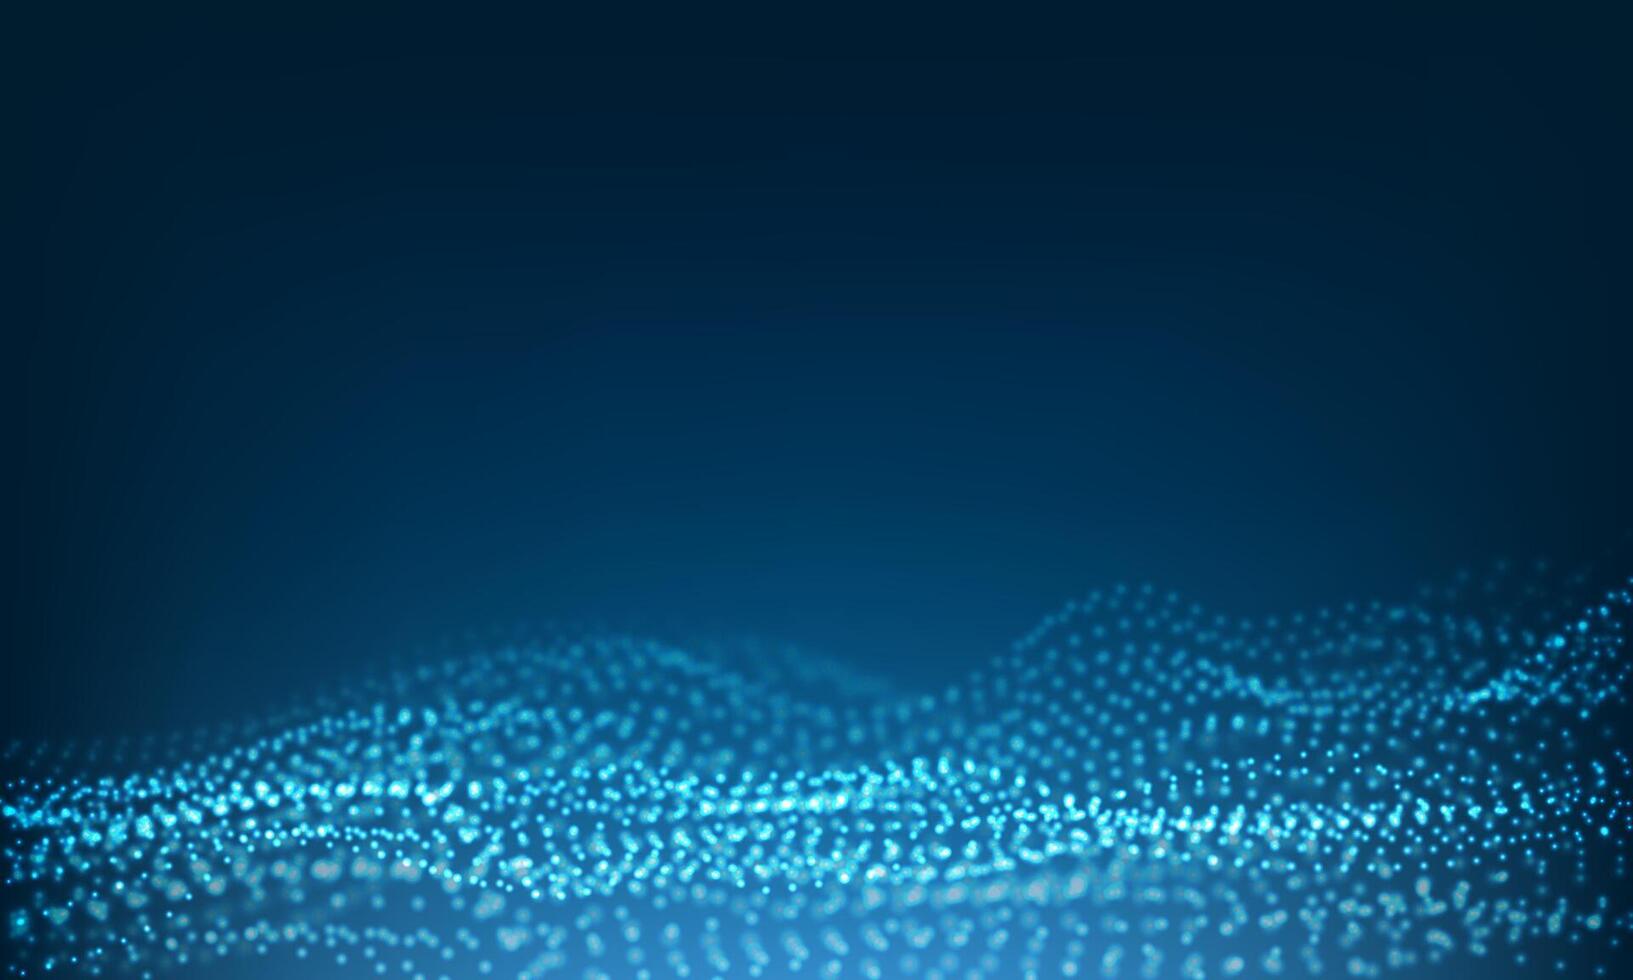 abstrato azul partículas fluxo onda ponto panorama digital dados estrutura futuro malha rede tecnologia fundo vetor